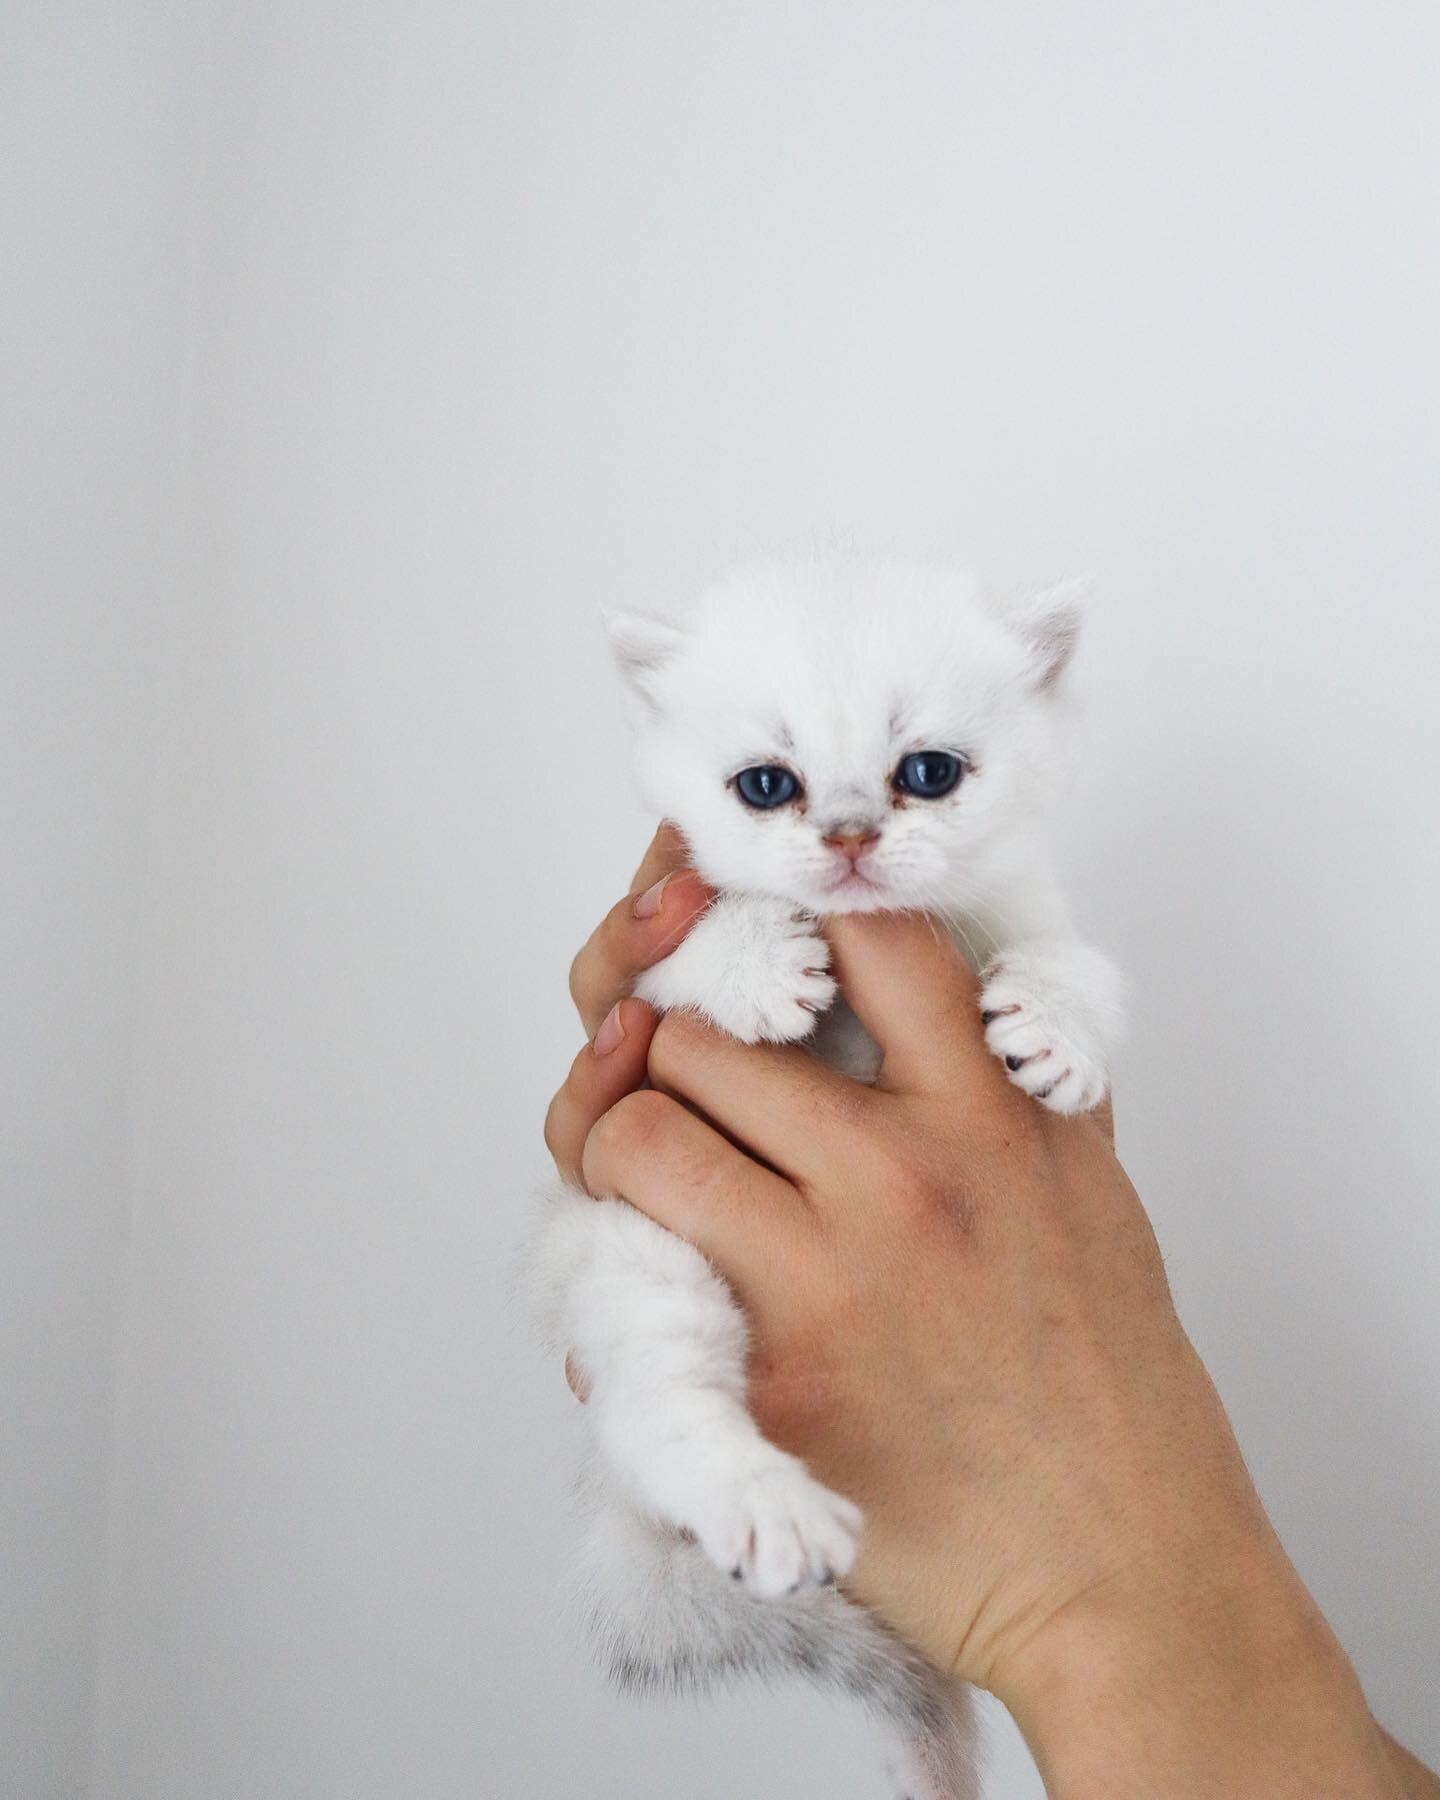 Little Polar baby!!! 

#britishshorthair#BSH#ns11#britishcat#cat#catsofinstagram#catmodelsofinstagram#catsofcanada#cuddlycat#britishshorthairkittens#canadianbritishshorthair#kittens#silvercats#britishsilver#silvershaded#scottishfold#scottishcat#vanco